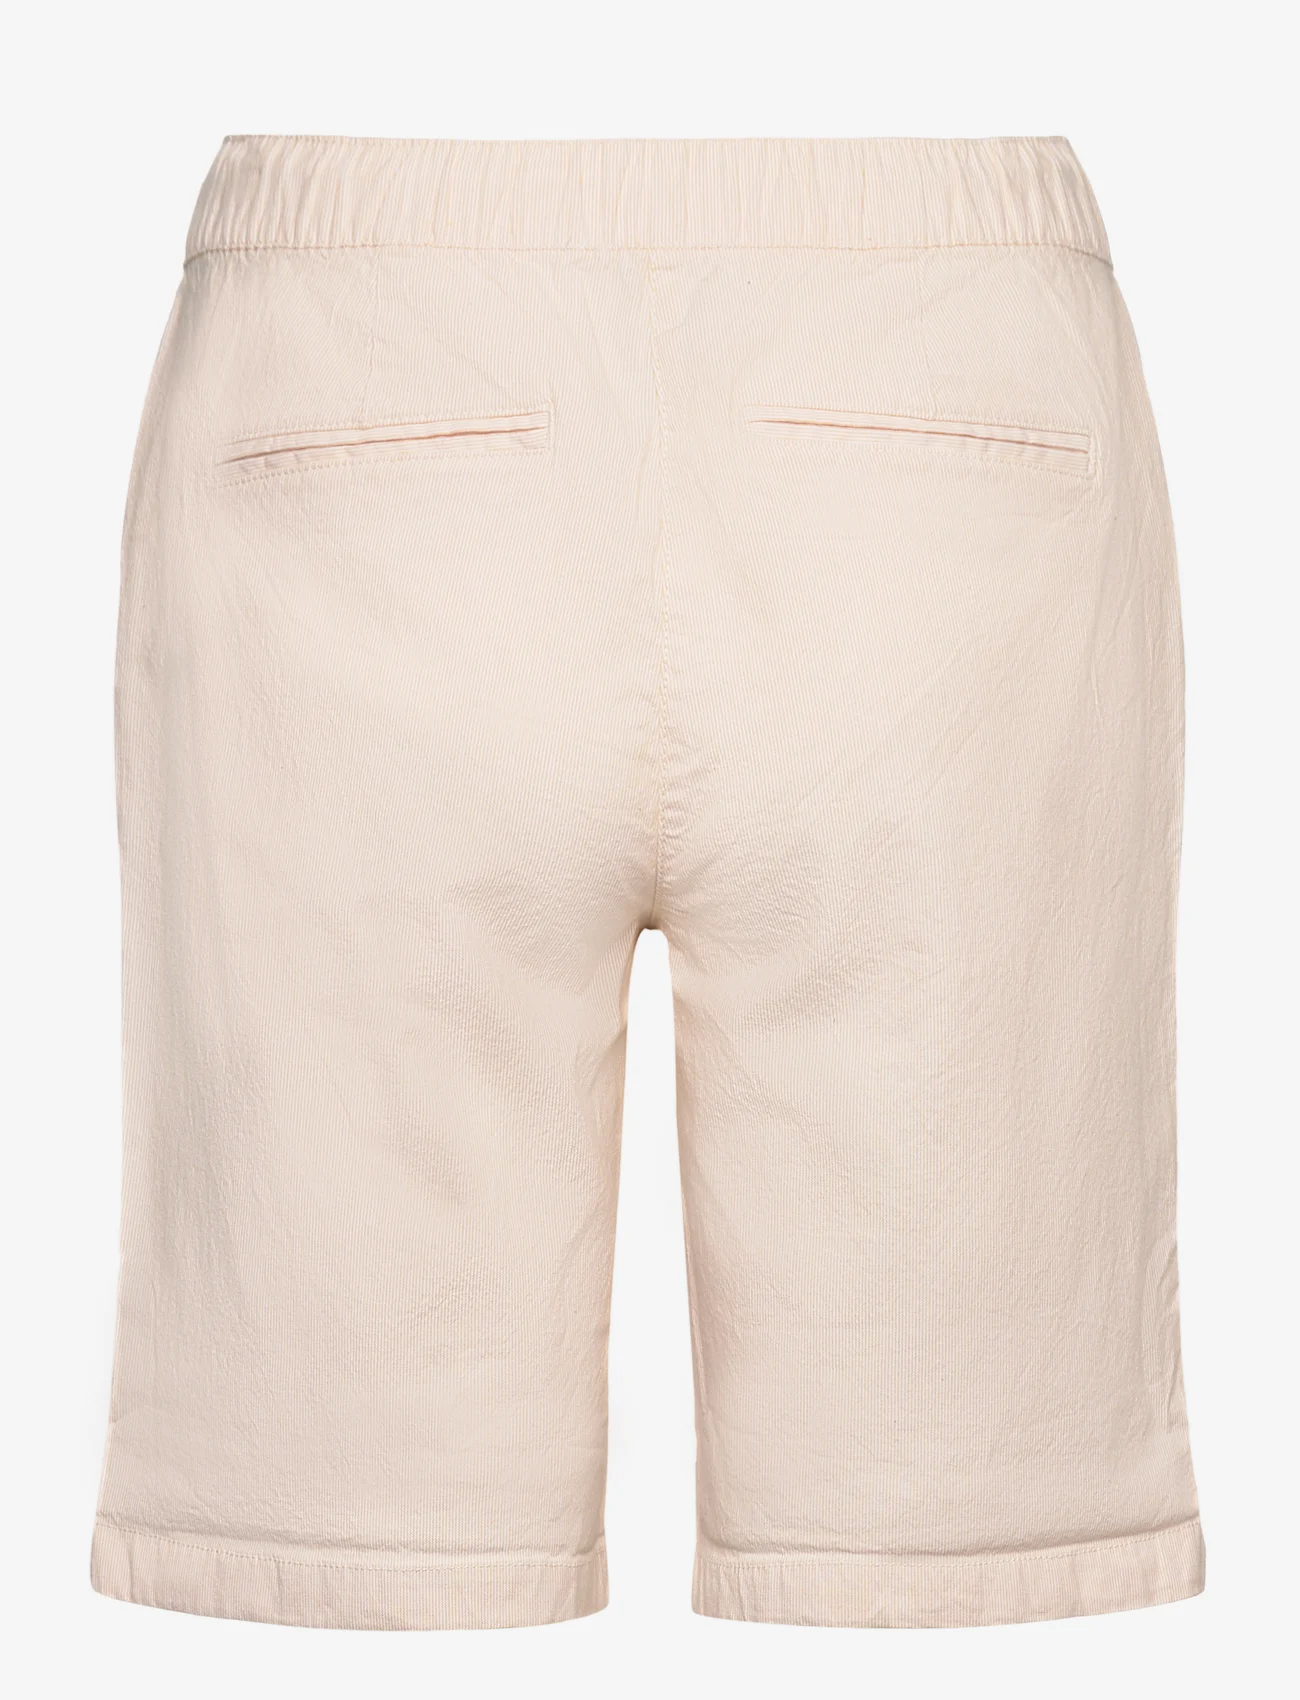 Tom Tailor - bermuda chino shorts - laveste priser - fawn beige offwhite stripe - 1